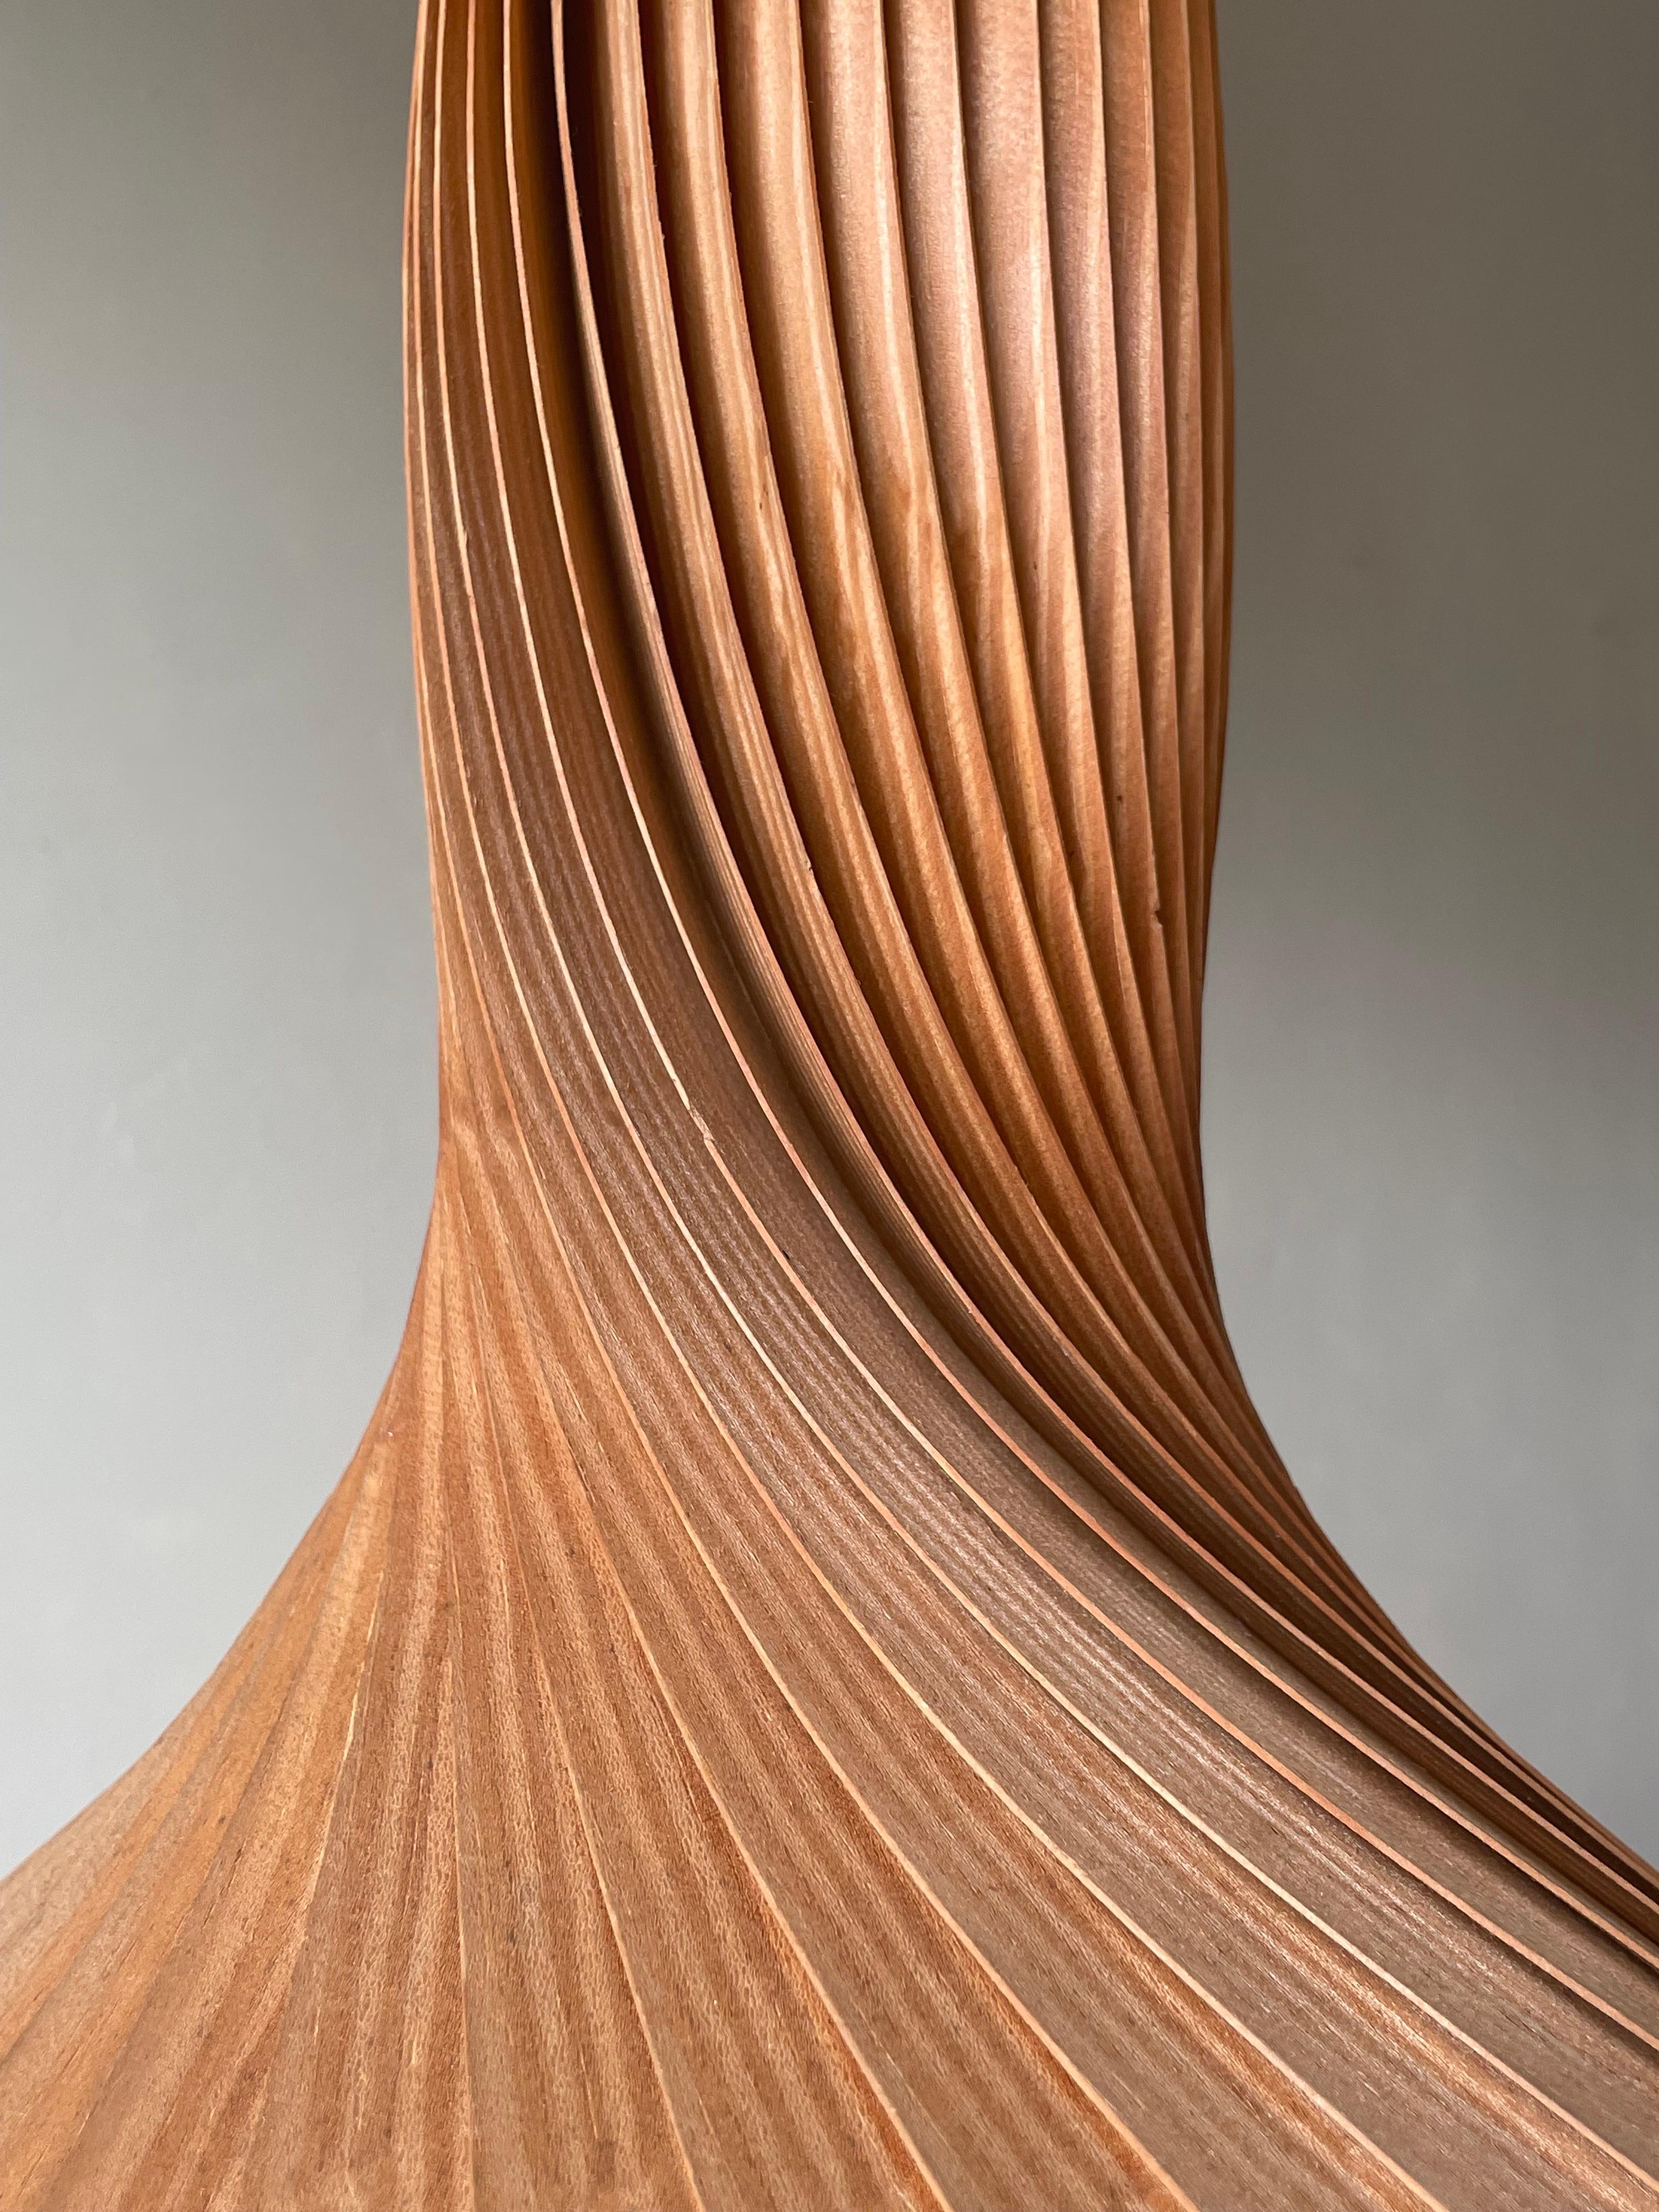 Large Swedish Jakobsson Swirling Pine Veneer Pendant, 1960s For Sale 3